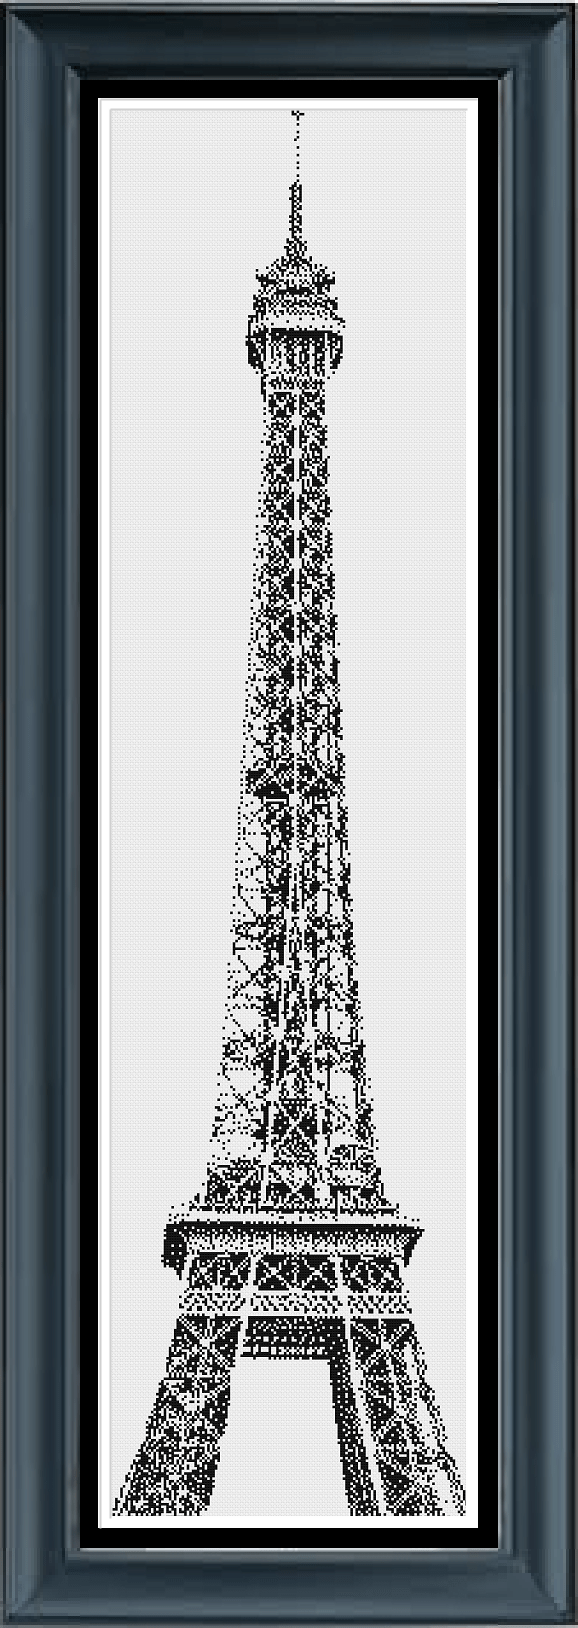 Stitching Jules Design Cross Stitch Pattern Physical Pattern - $15 Eiffel Tower Cross Stitch Pattern | Paris Cross Stitch Pattern | Blackwork Cross Stitch Pattern | Physical And Digital PDF Download Pattern Options